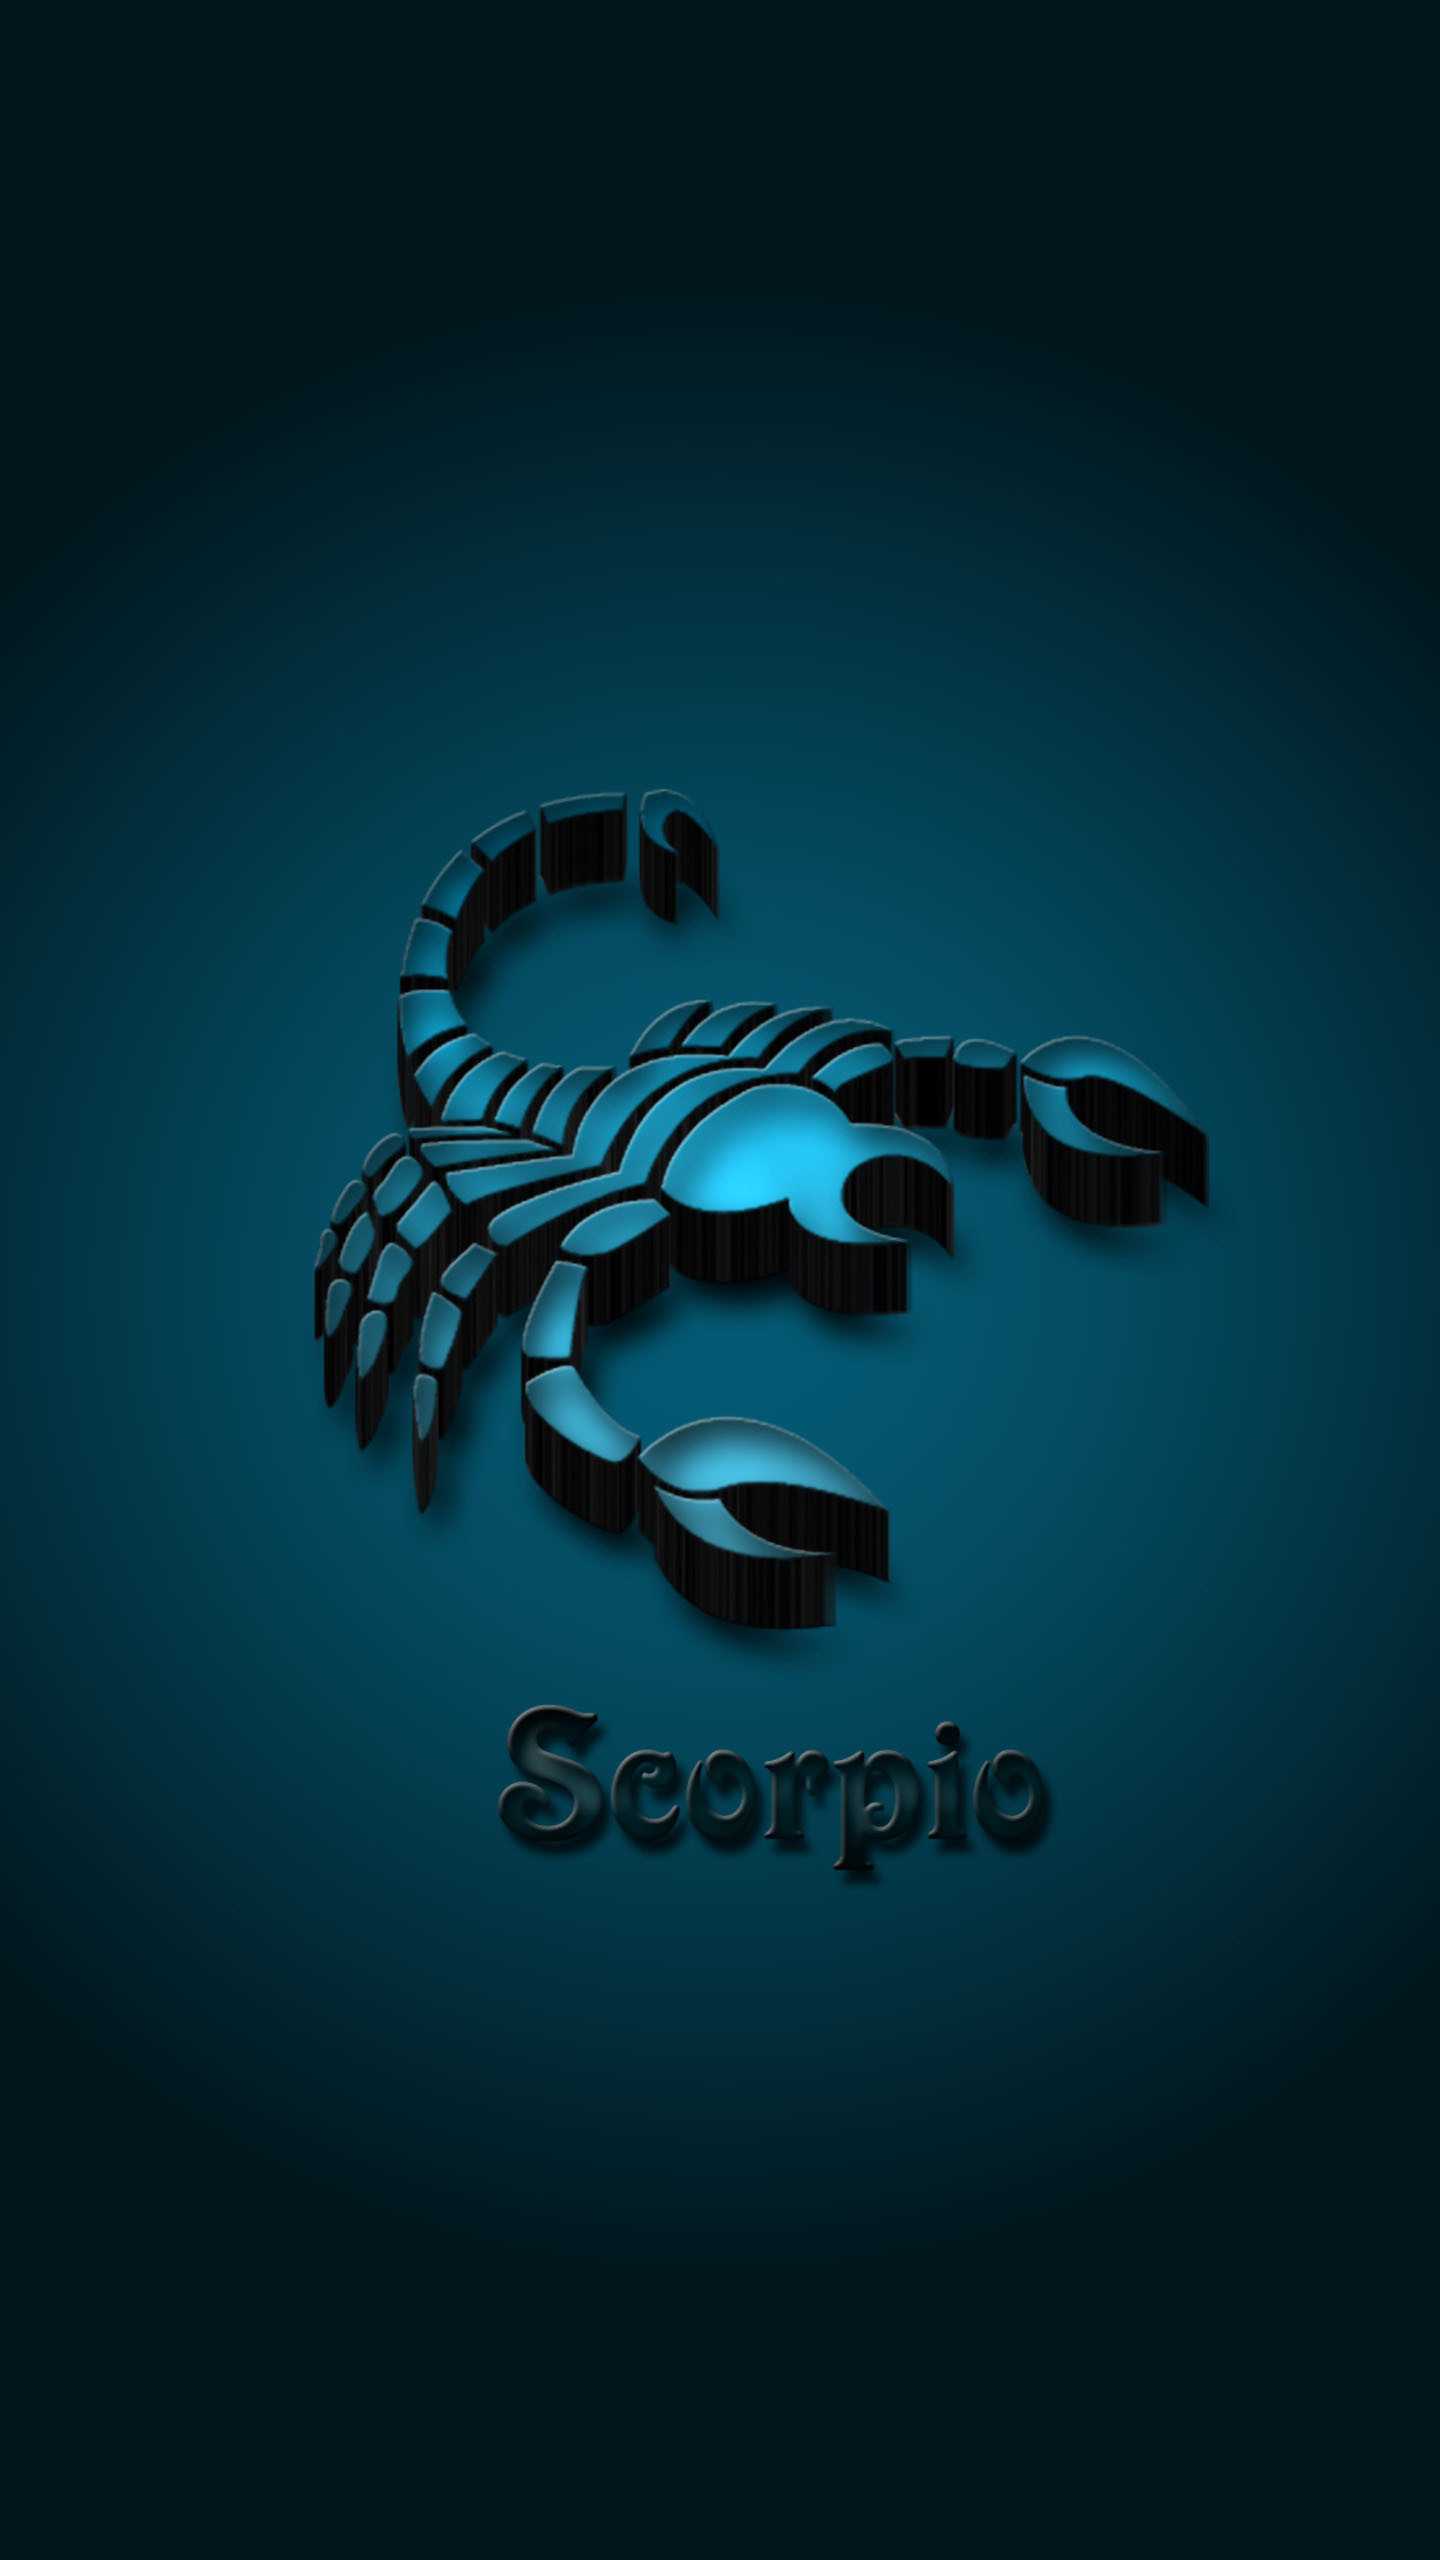 IPhone wallpaper with Scorpio symbol on a blue background - Scorpio